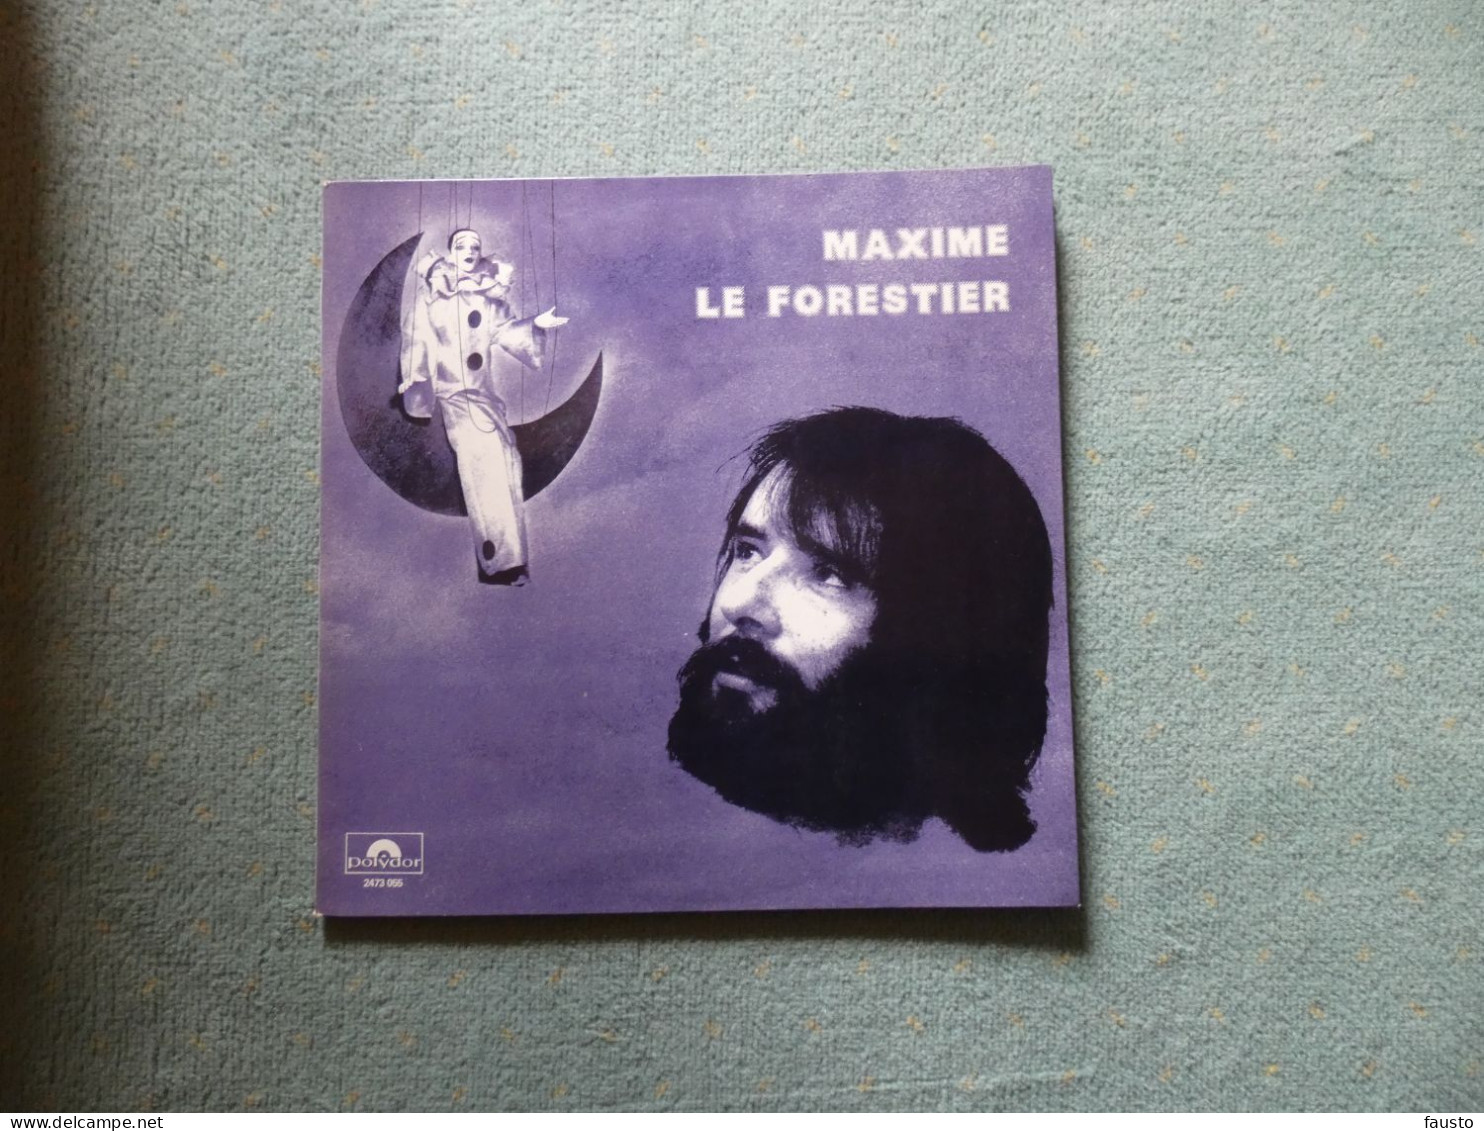 Maxime Le Forestier Polydor 2473 055   1976 - Autres - Musique Française